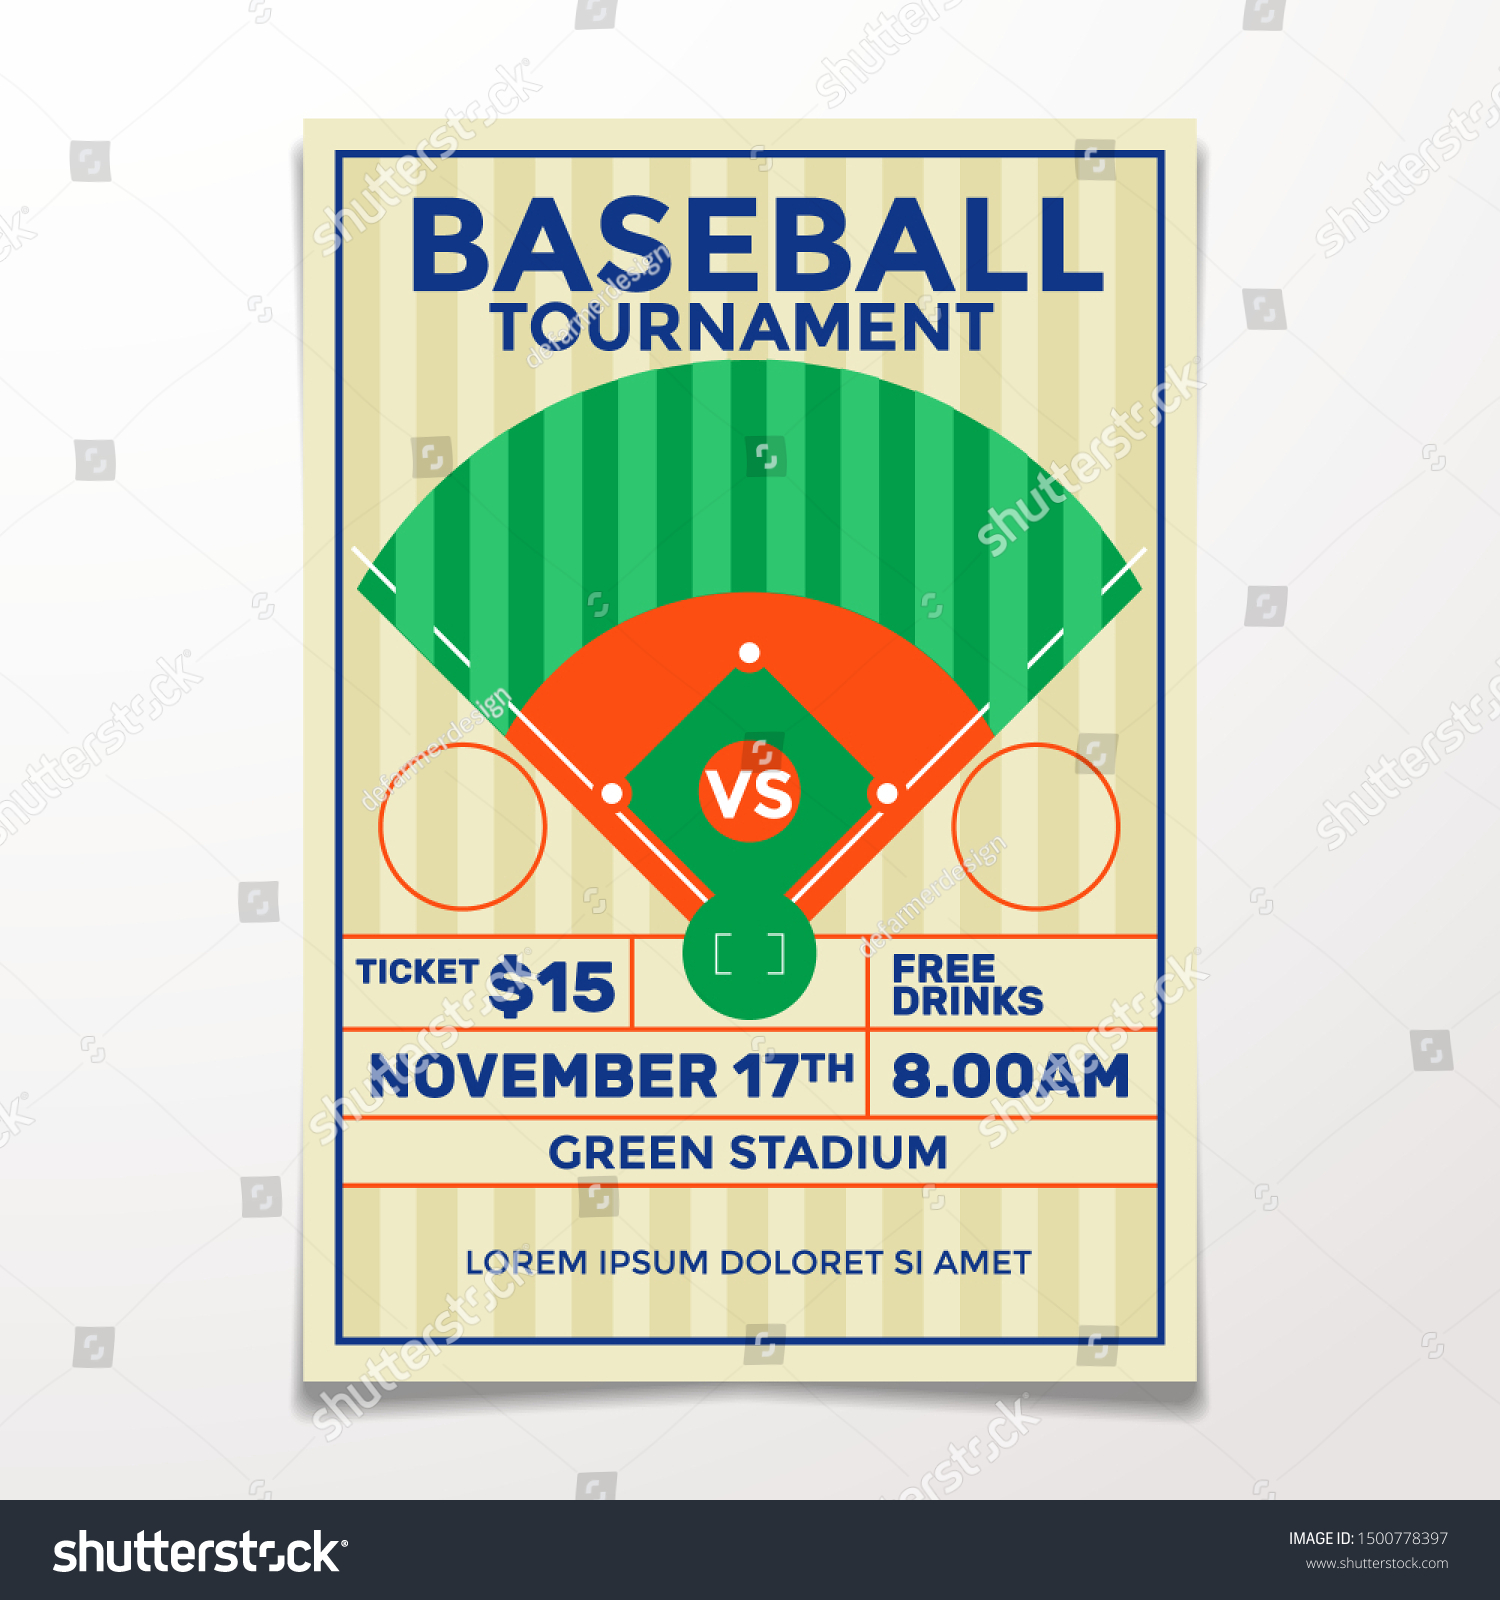 Vintage Baseball Tournament Flyer Template Illustration Stock  For Baseball Tournament Flyer Template Throughout Baseball Tournament Flyer Template